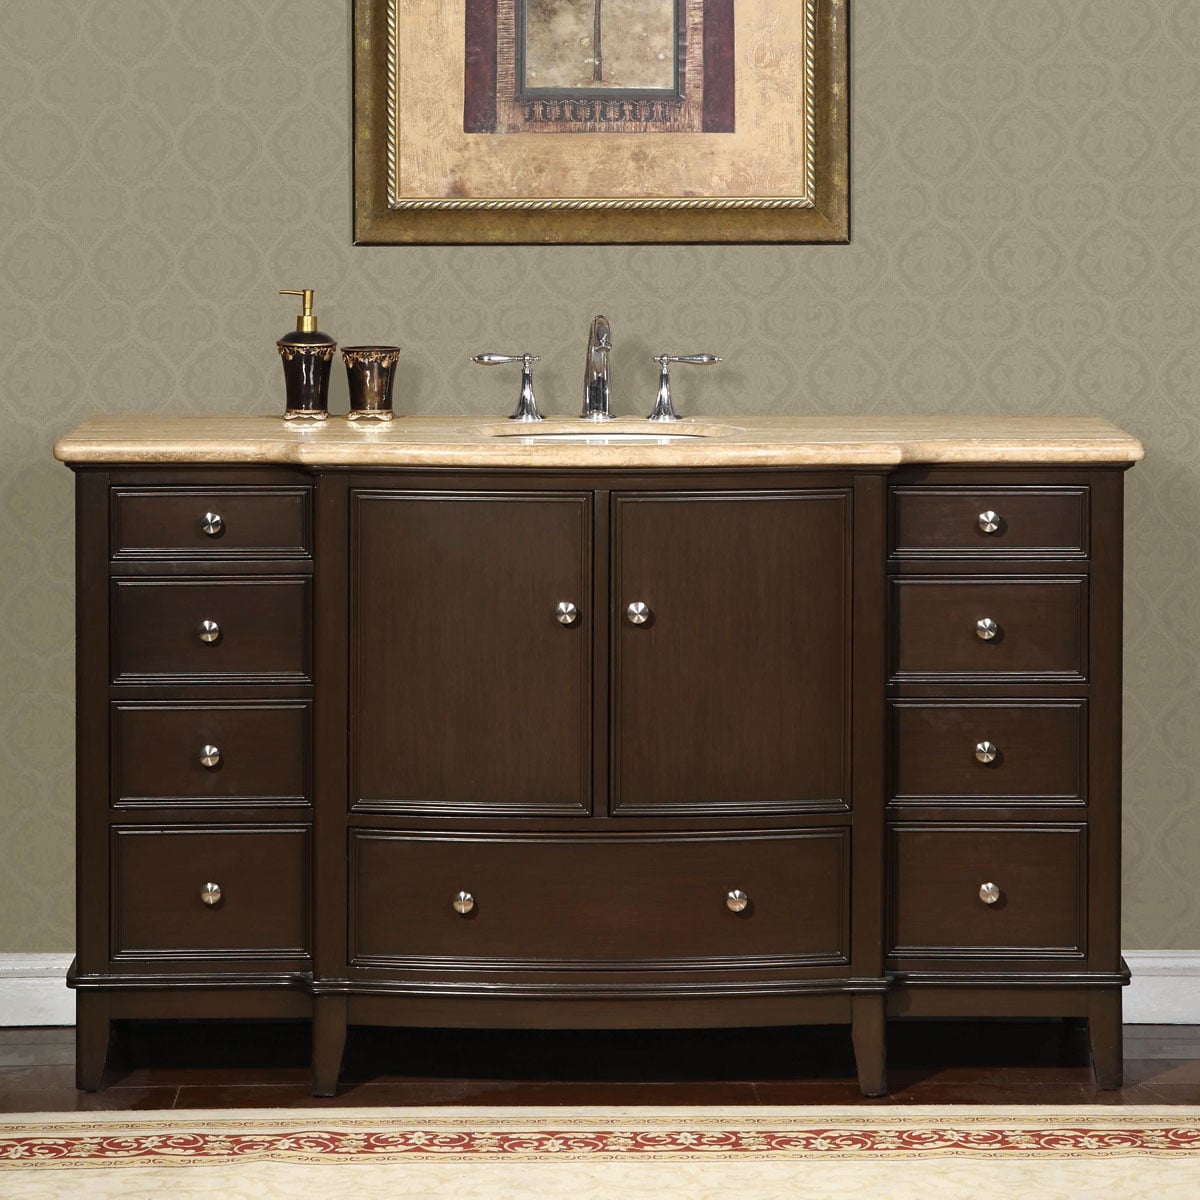 60-in Dark Walnut Undermount Single Sink Bathroom Vanity with Travertine Top in Brown | - Silkroad Exclusive HYP-0237-T-UWC-60